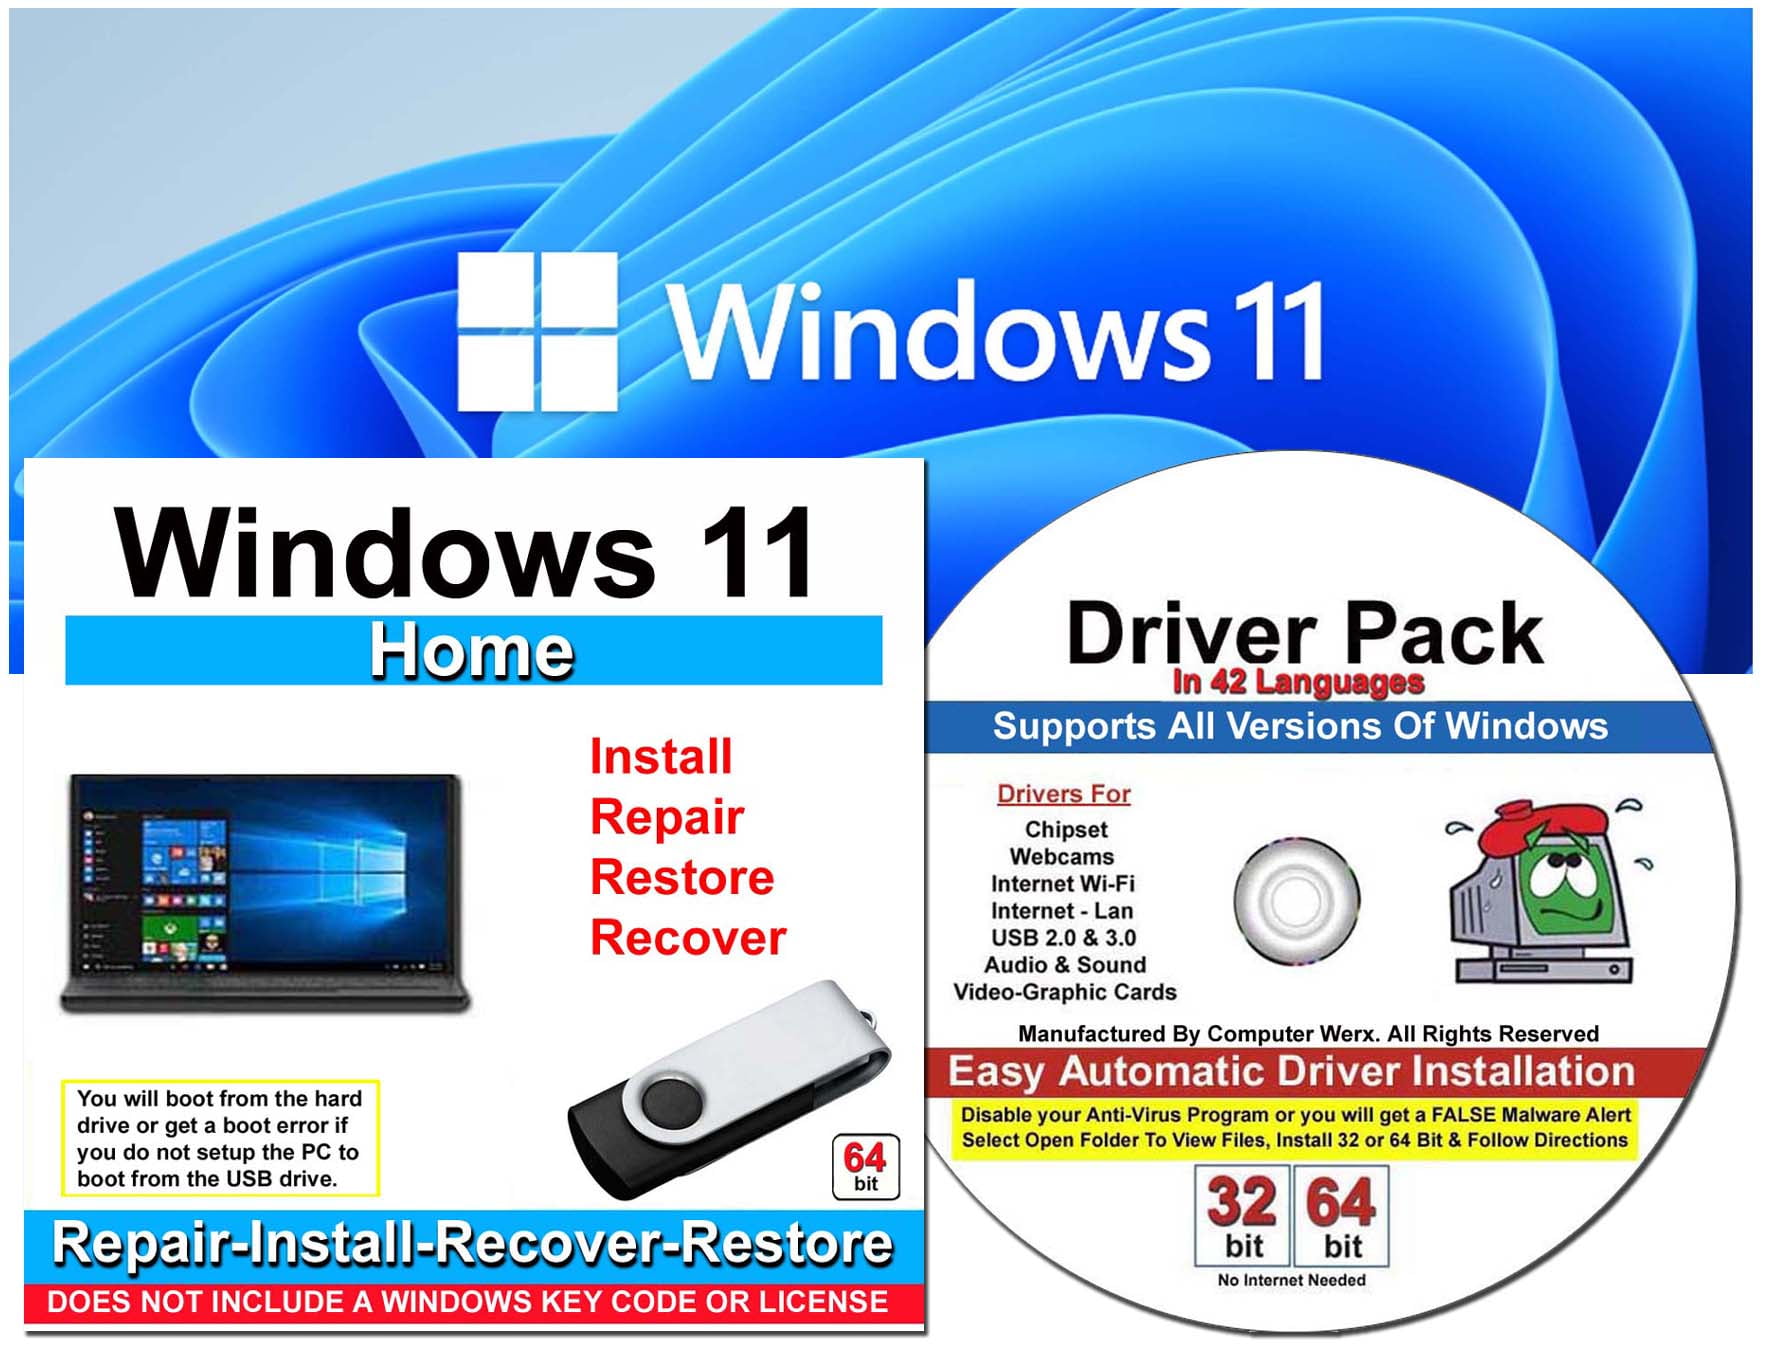 Computer Werx Windows 11 Home 64 Bit Repair, Recover, Restore & Reinstall  USB For UEFI Bios & Drivers Pack, 2PK